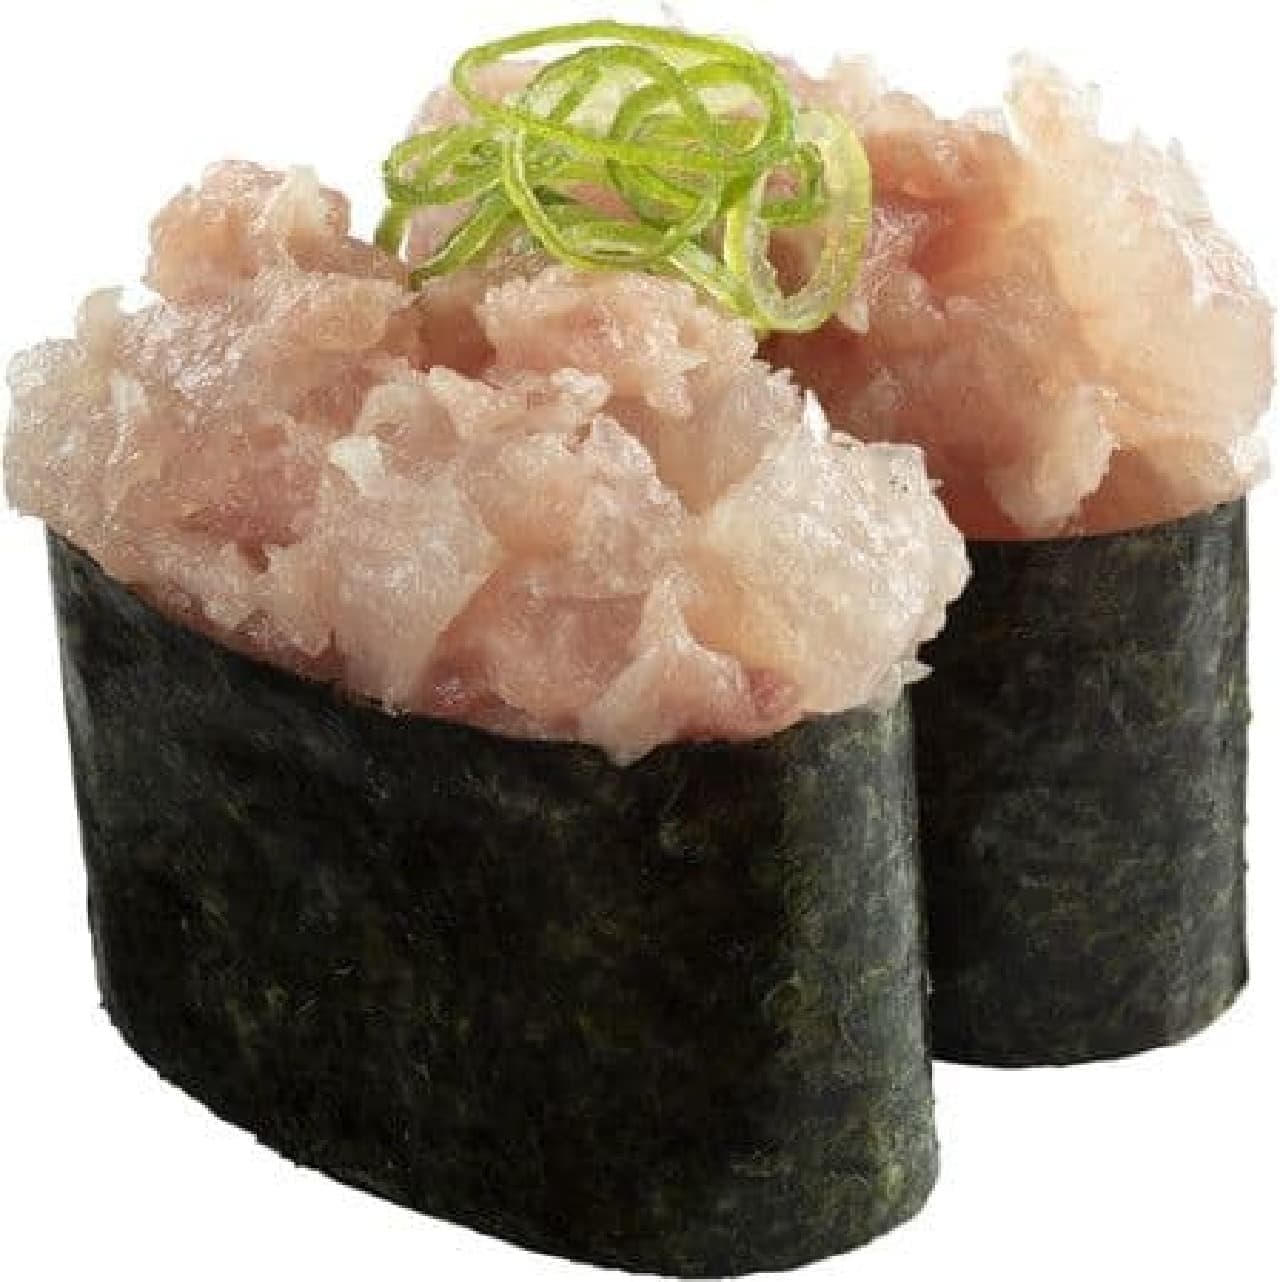 Sushiro "Large green onion tuna"